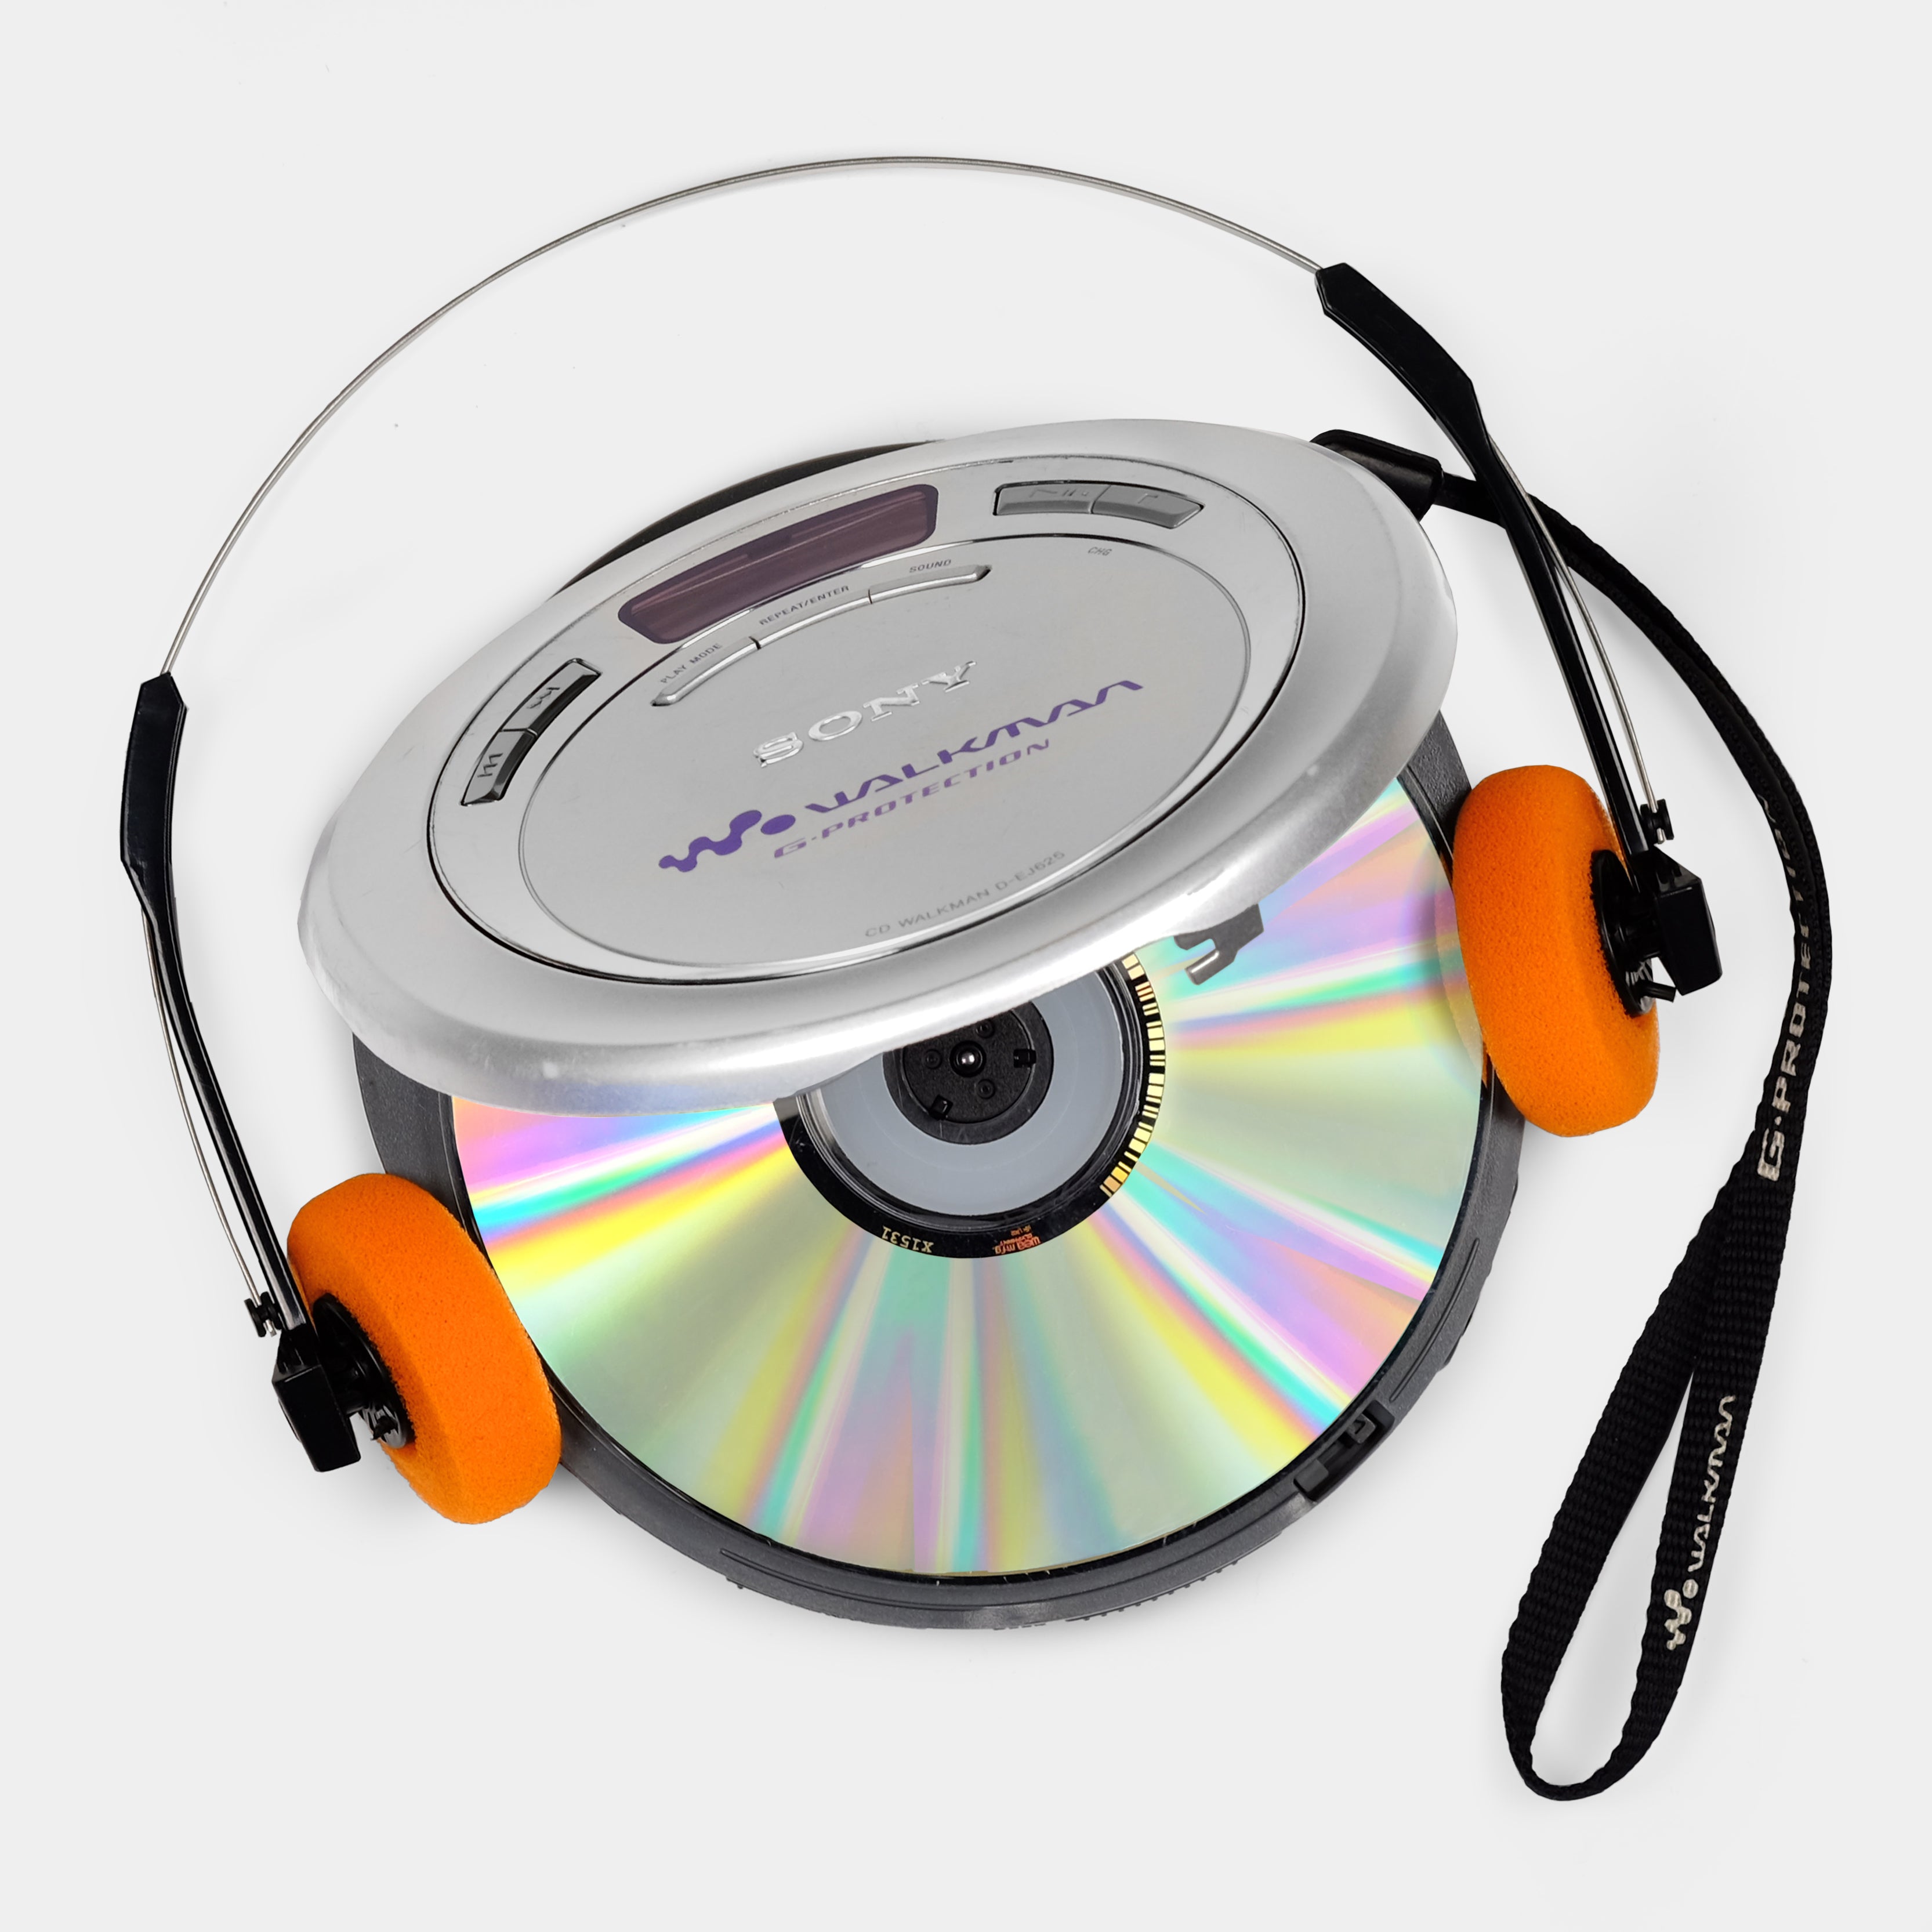 Sony Walkman D-EJ625 Portable CD Player